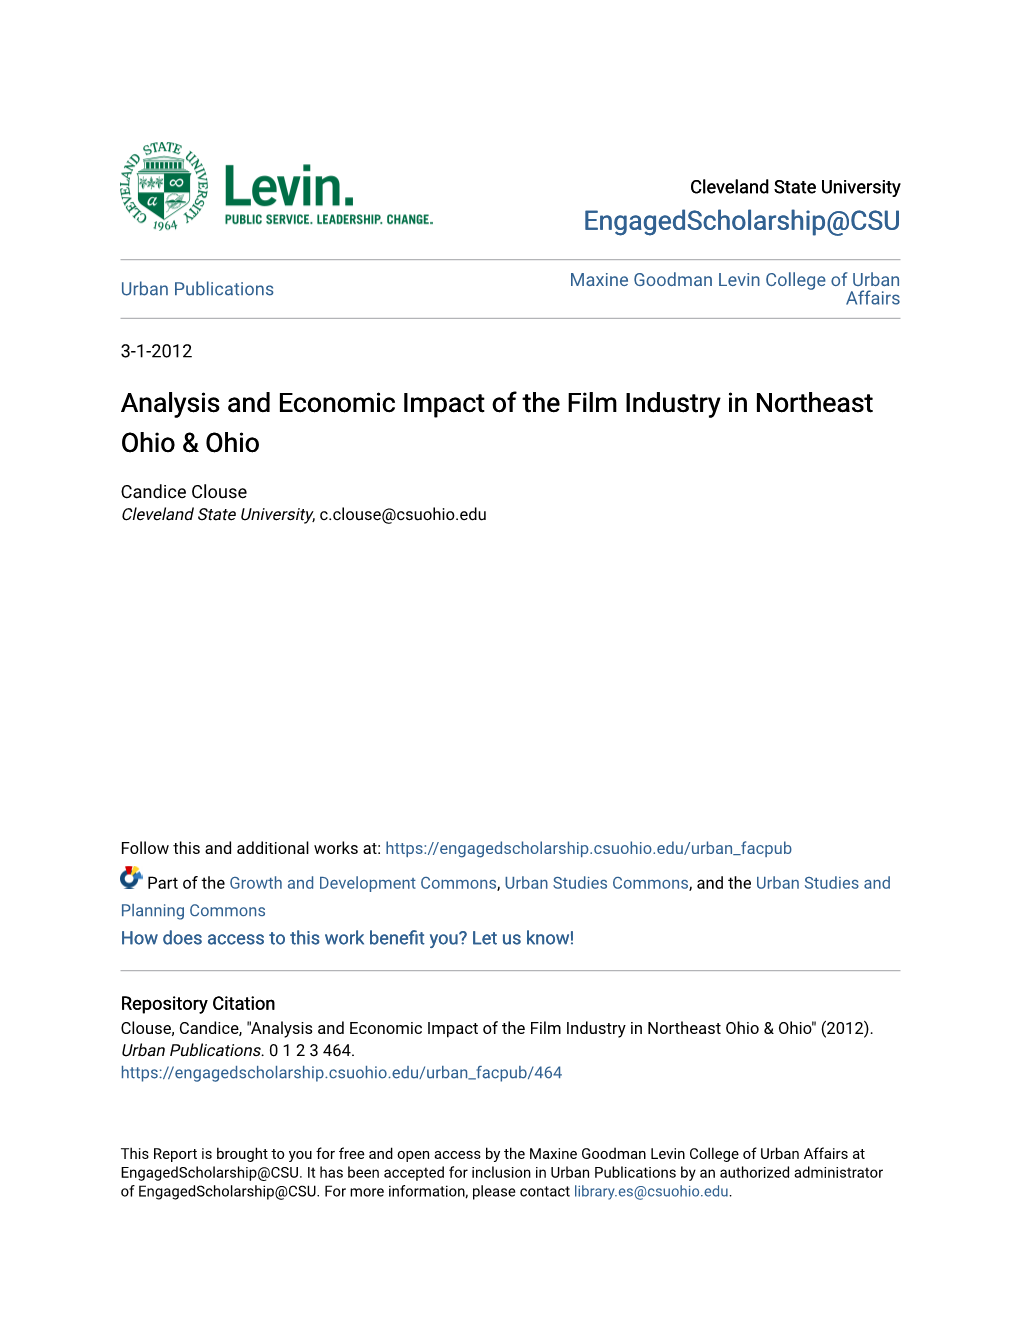 Analysis and Economic Impact of the Film Industry in Northeast Ohio & Ohio